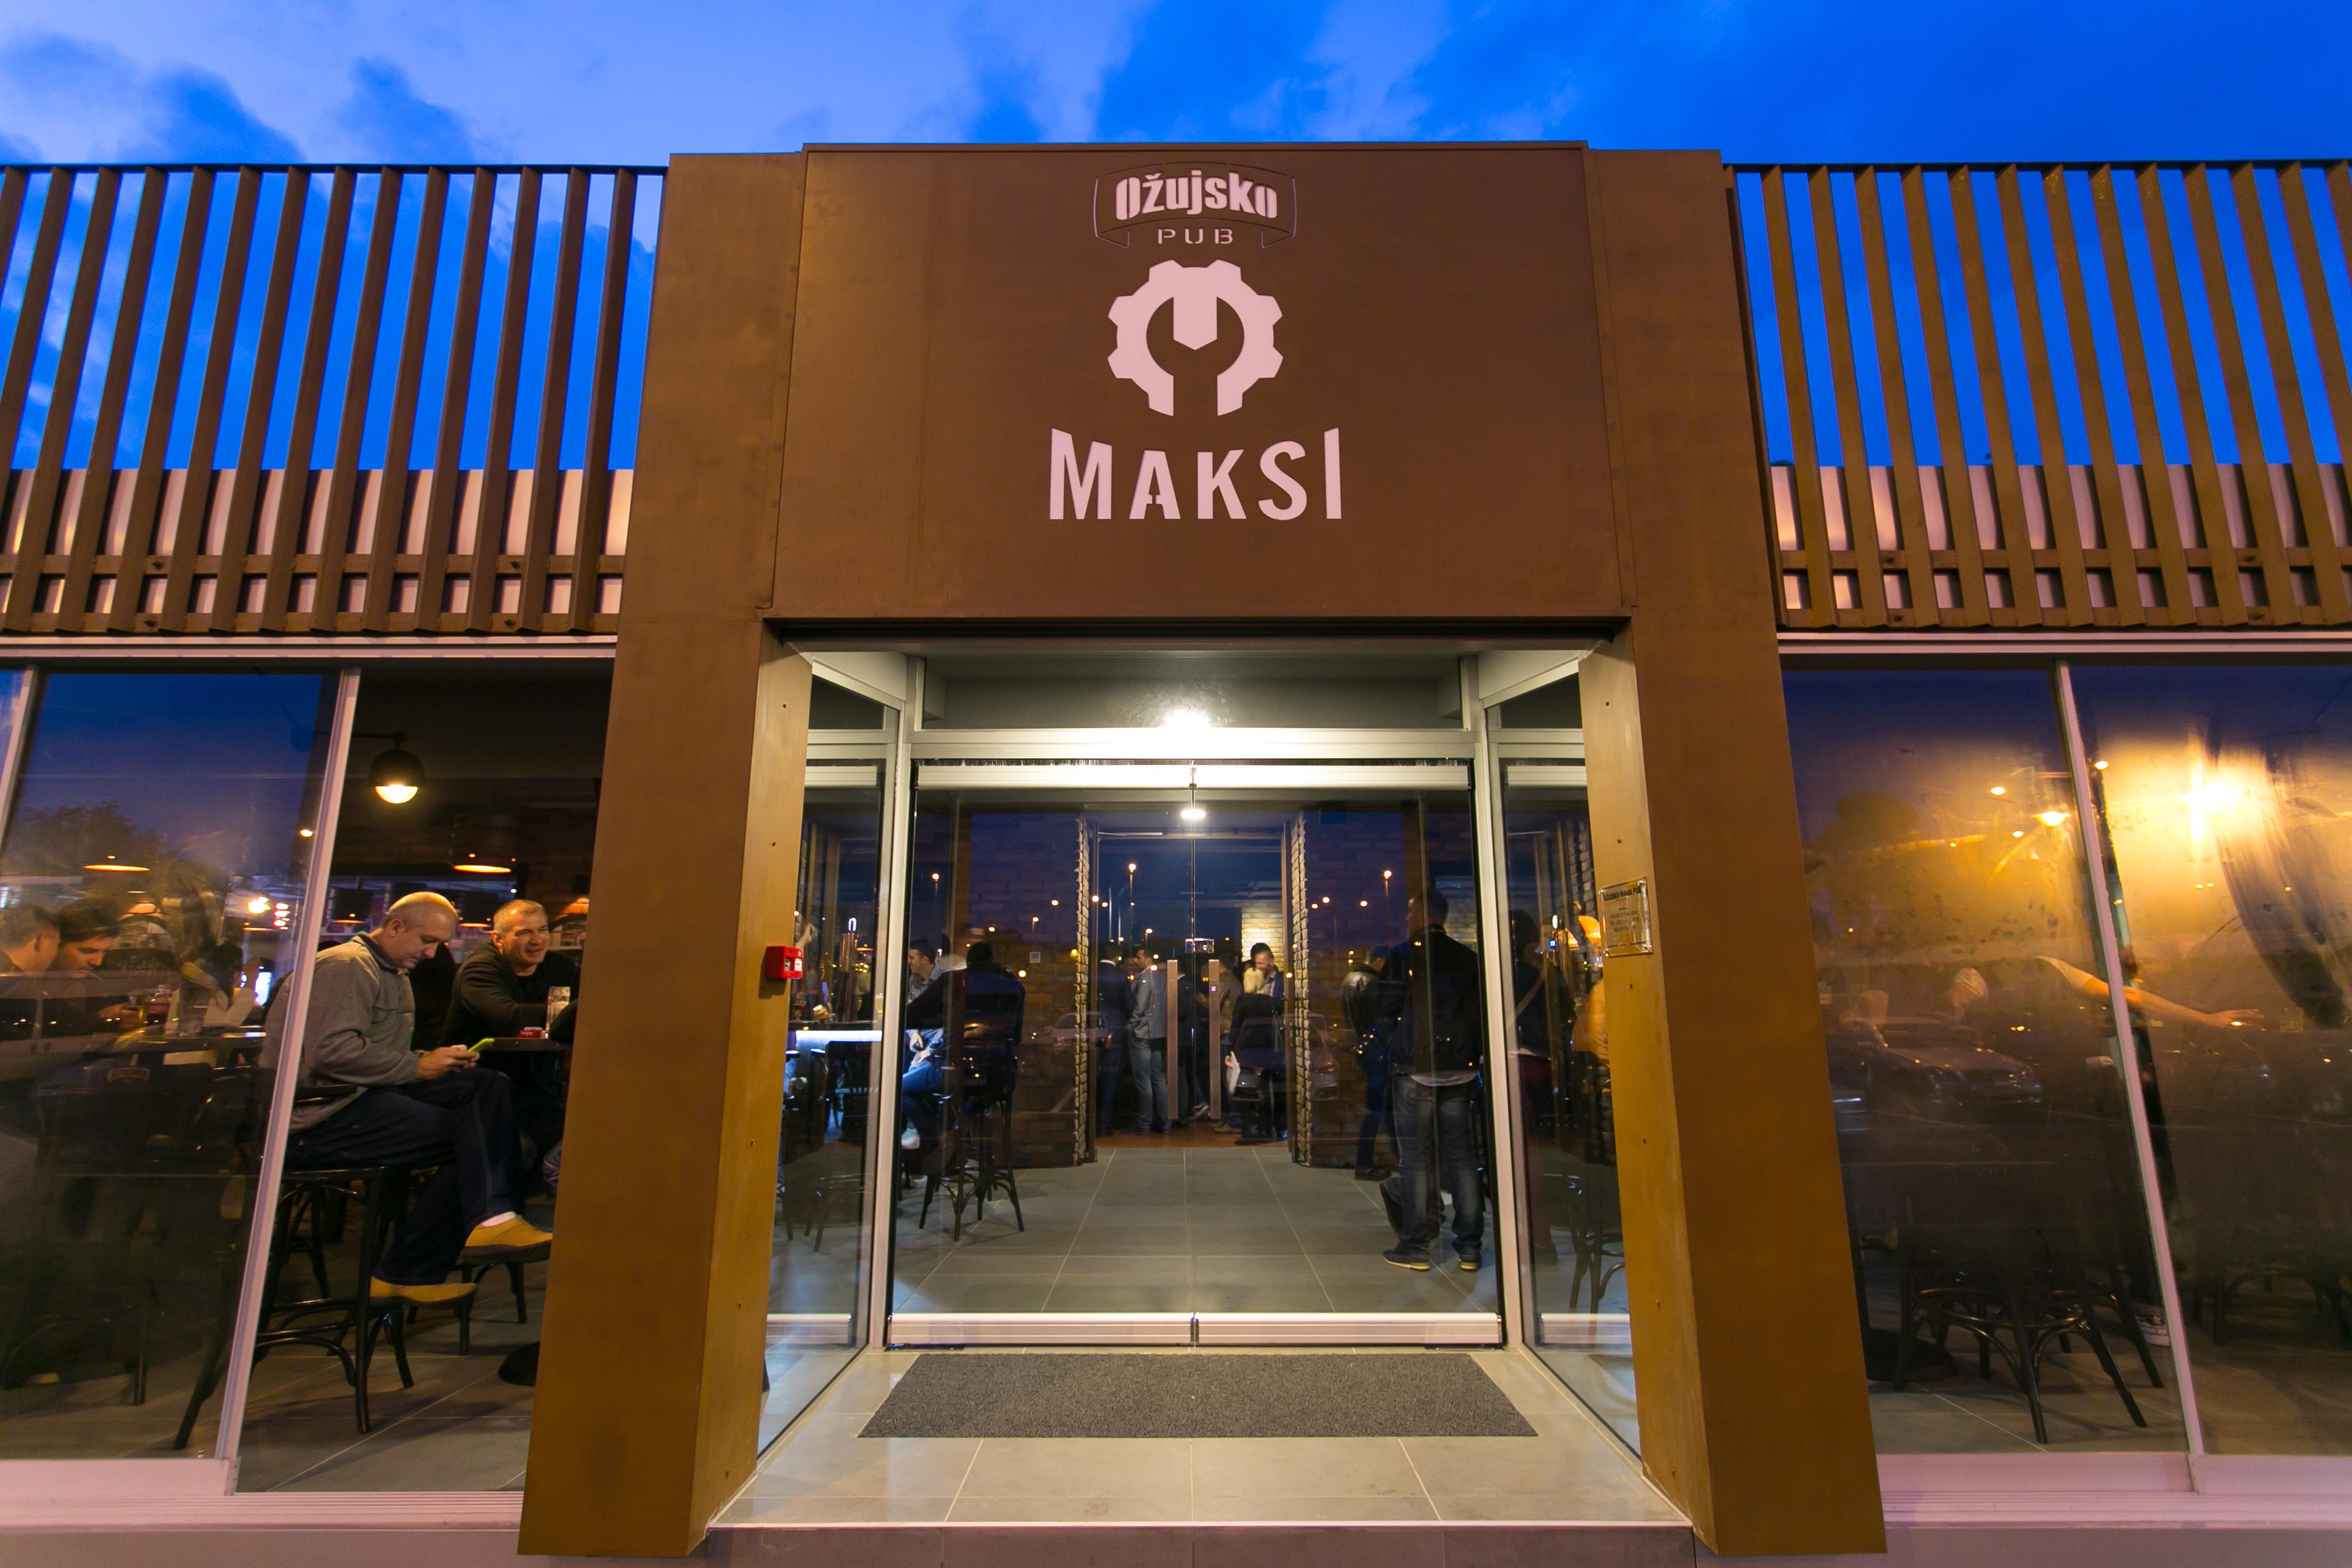 Cover image of this place Ožujsko pub Maksi